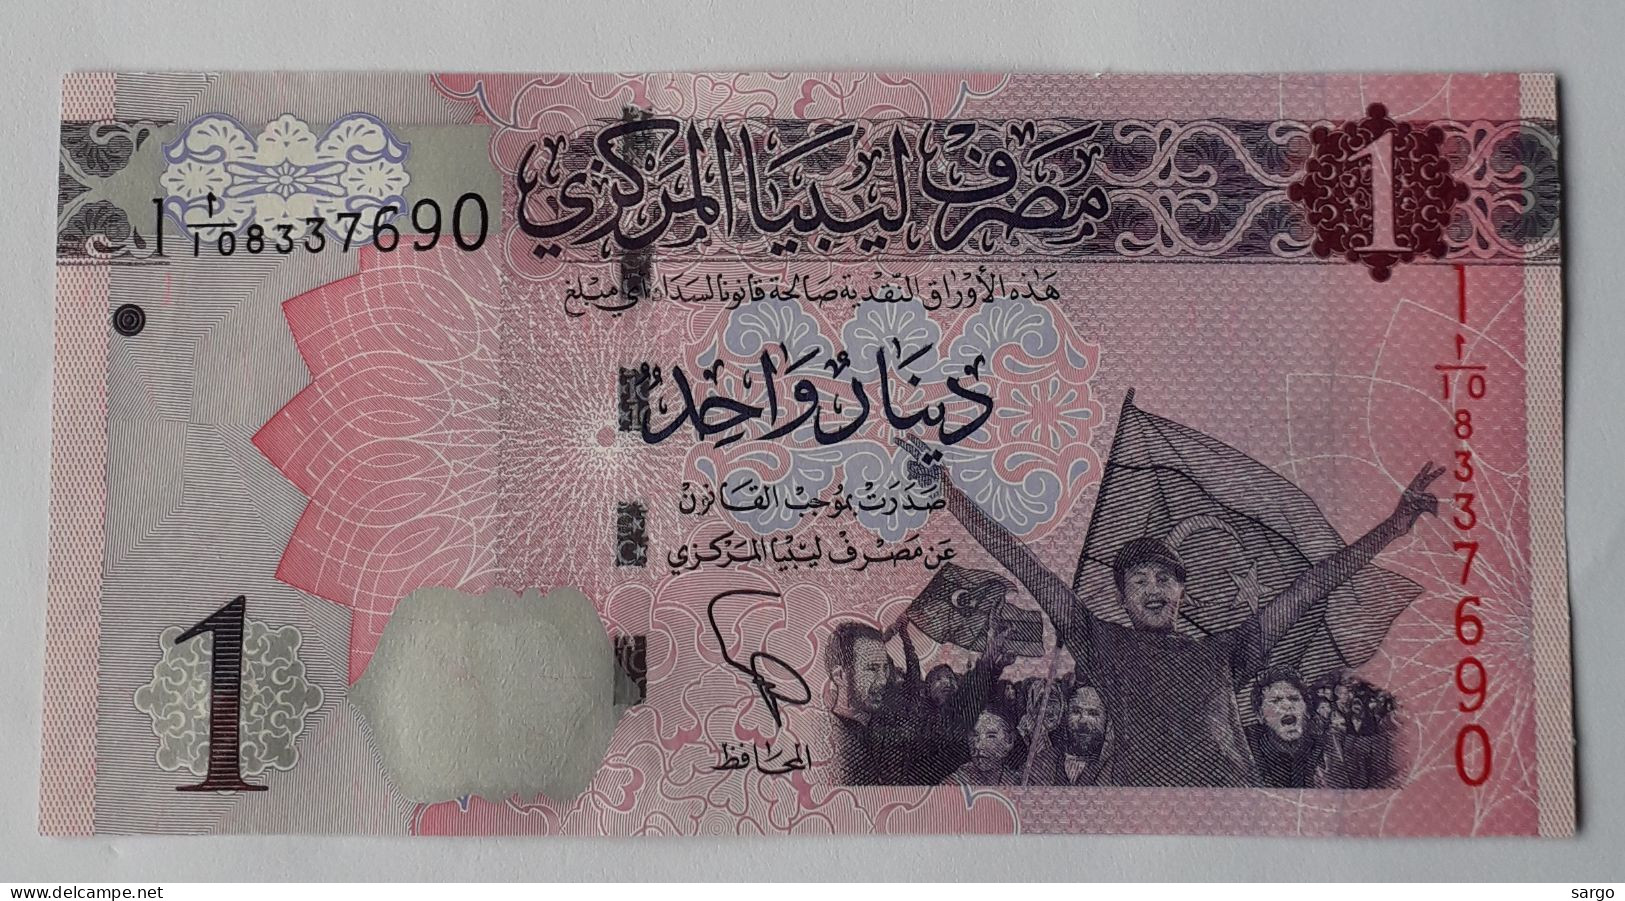 LIBYA - 1 DINAR - 2013 -  P 76  - UNC - BANKNOTES - PAPER MONEY - CARTAMONETA - - Libya